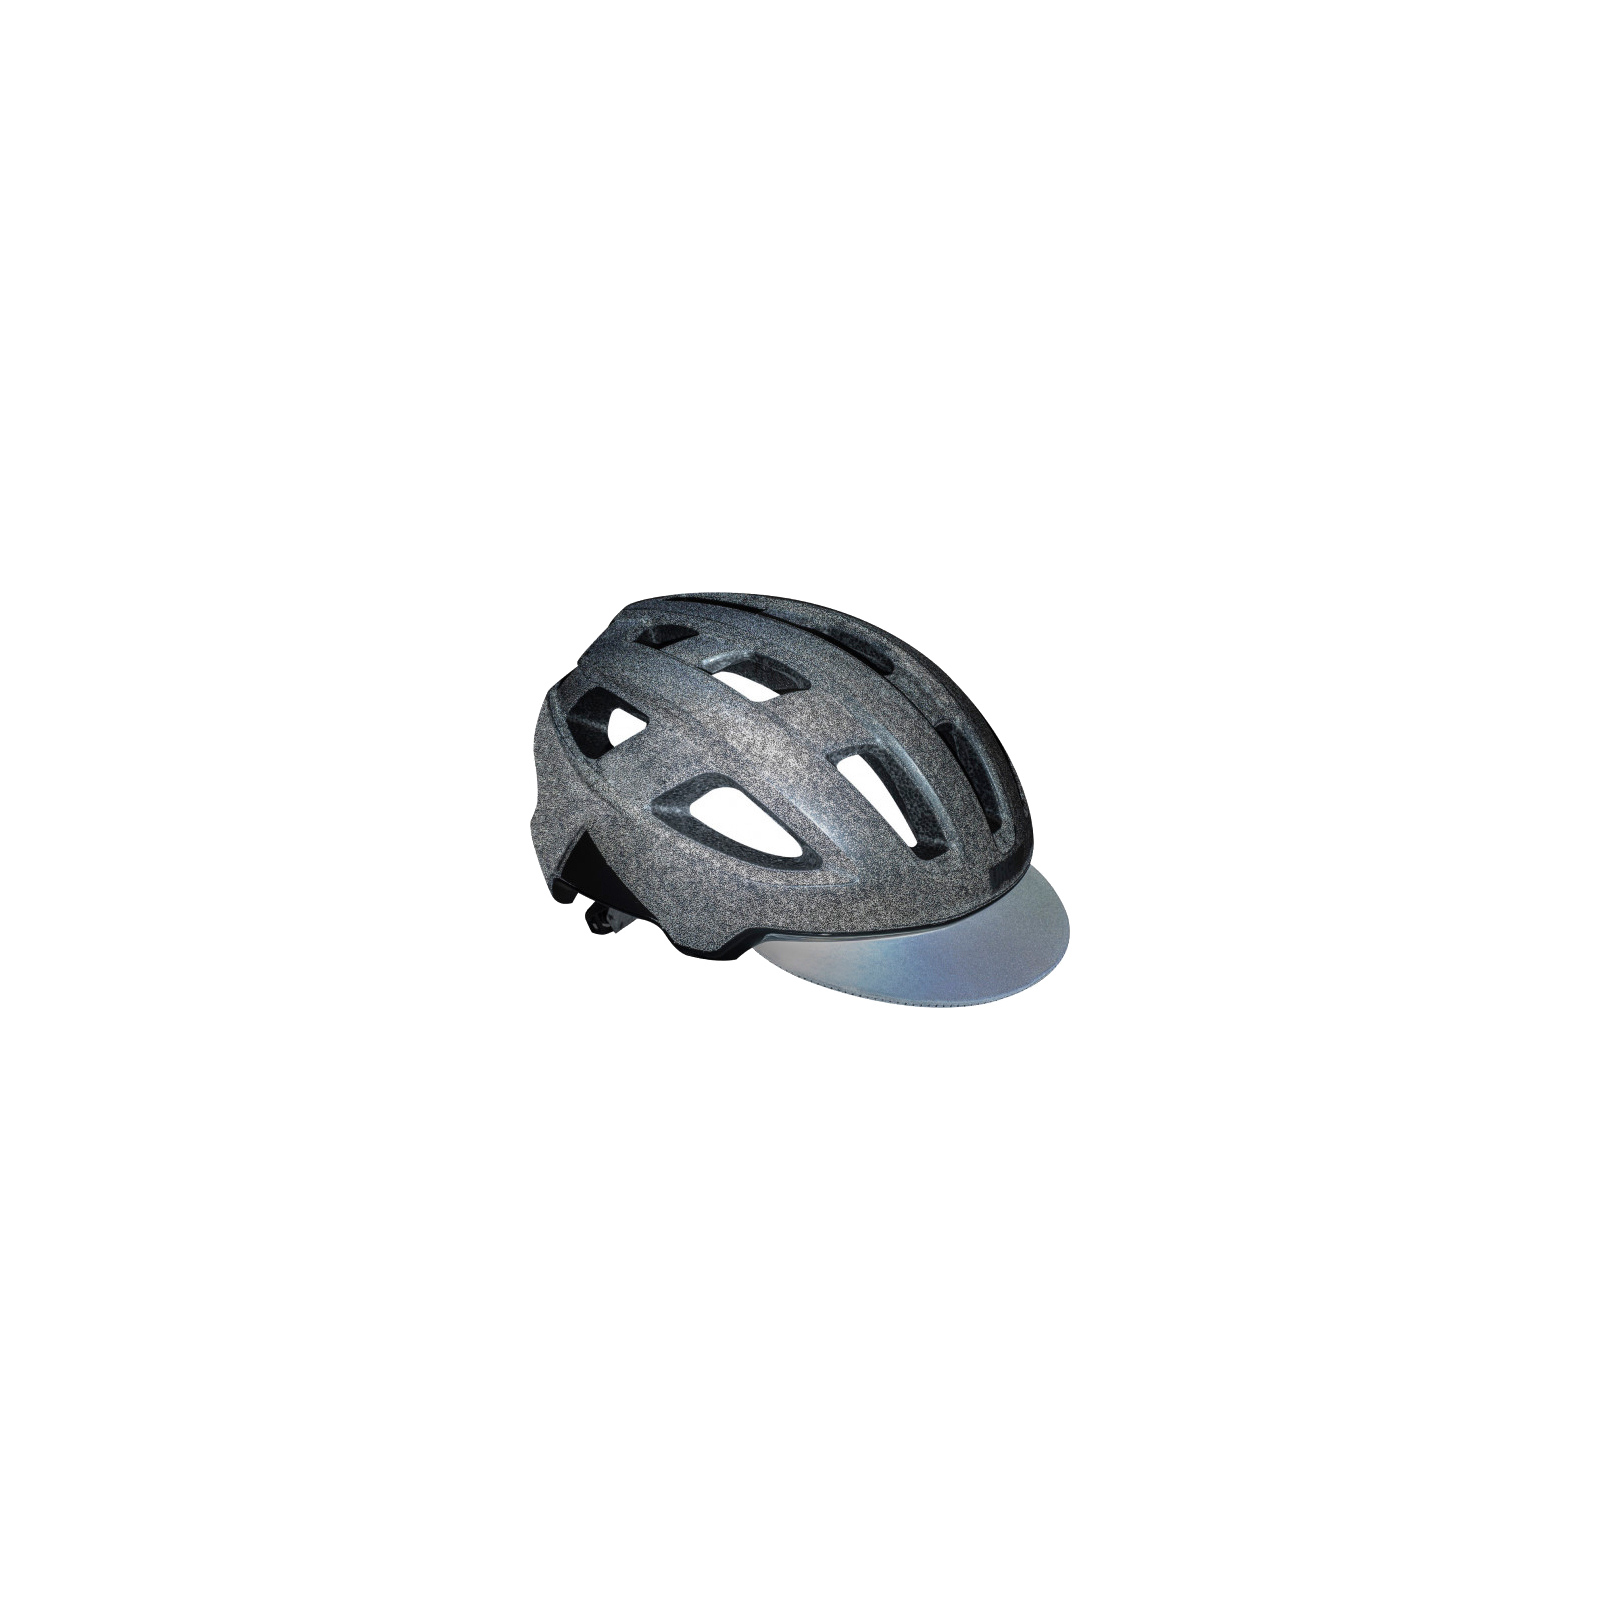 Шлем Urge Strail Металік S/M 55-59 см (UBP22692M) изображение 5